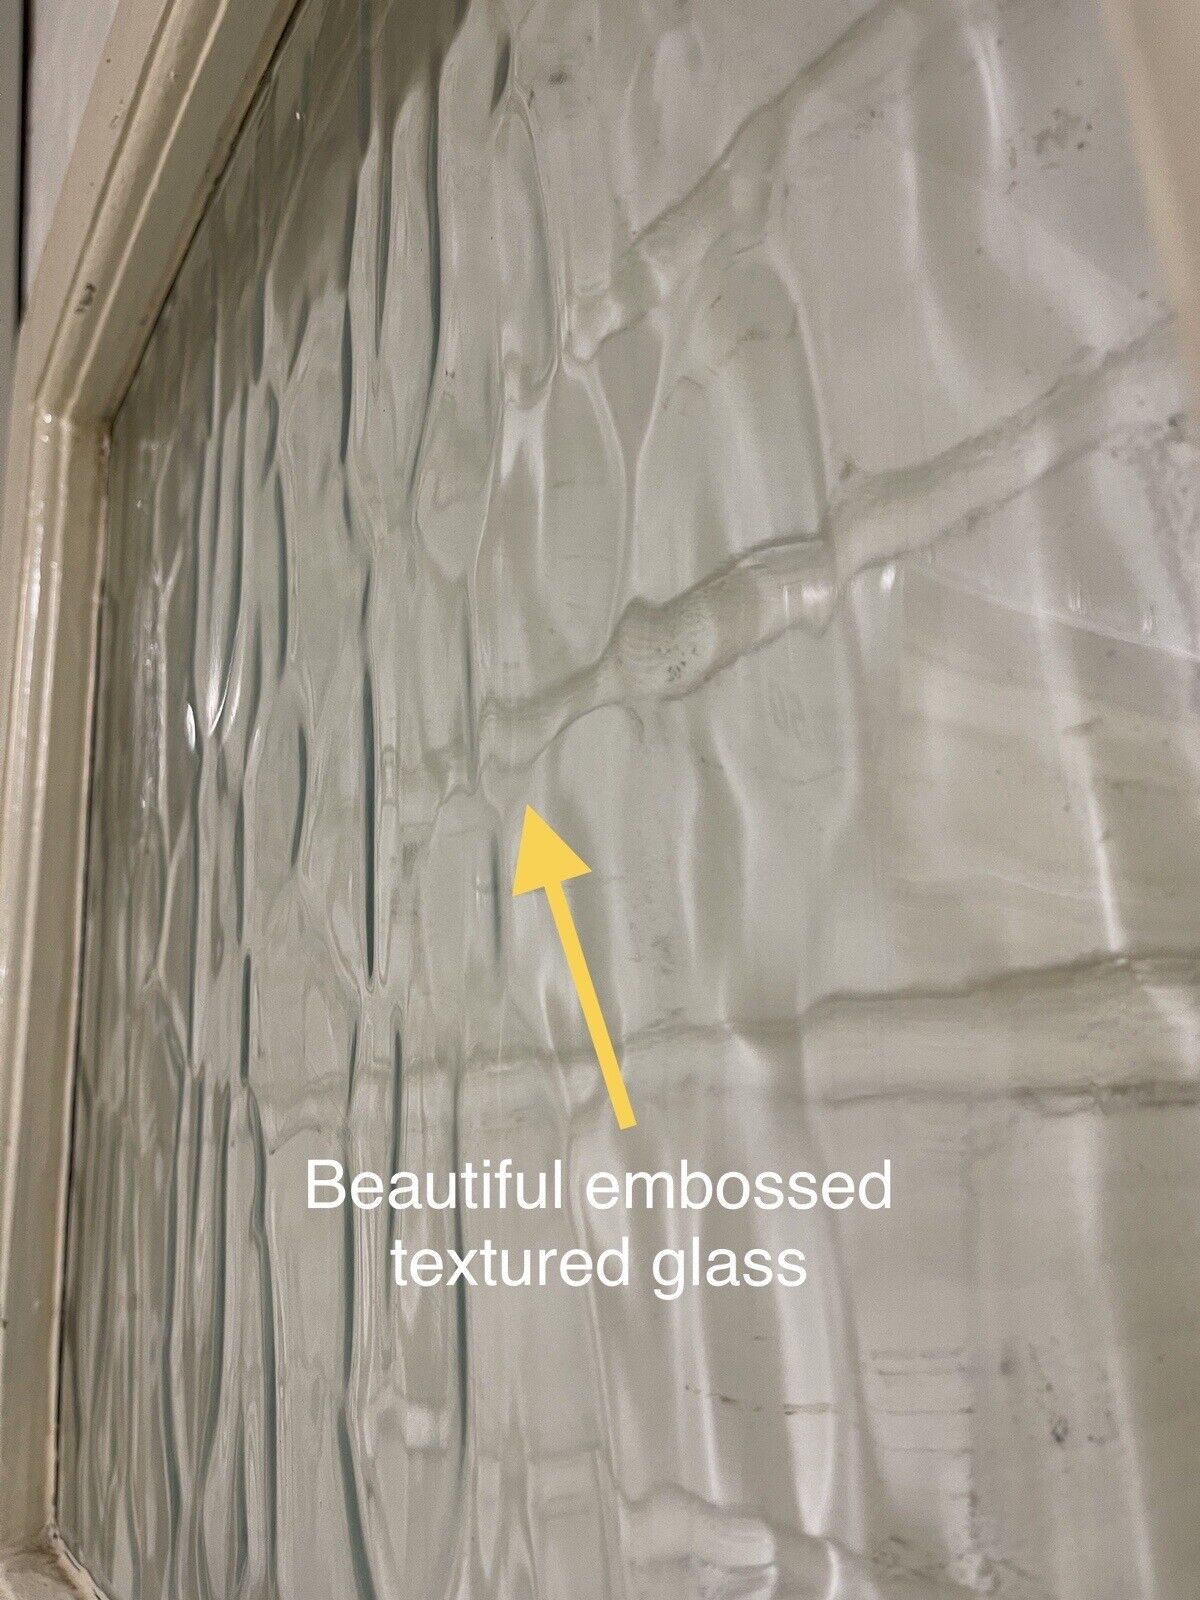 Reclaimed Georgian French Single Panel Glass Wooden Double Doors 2068 x 1210mm